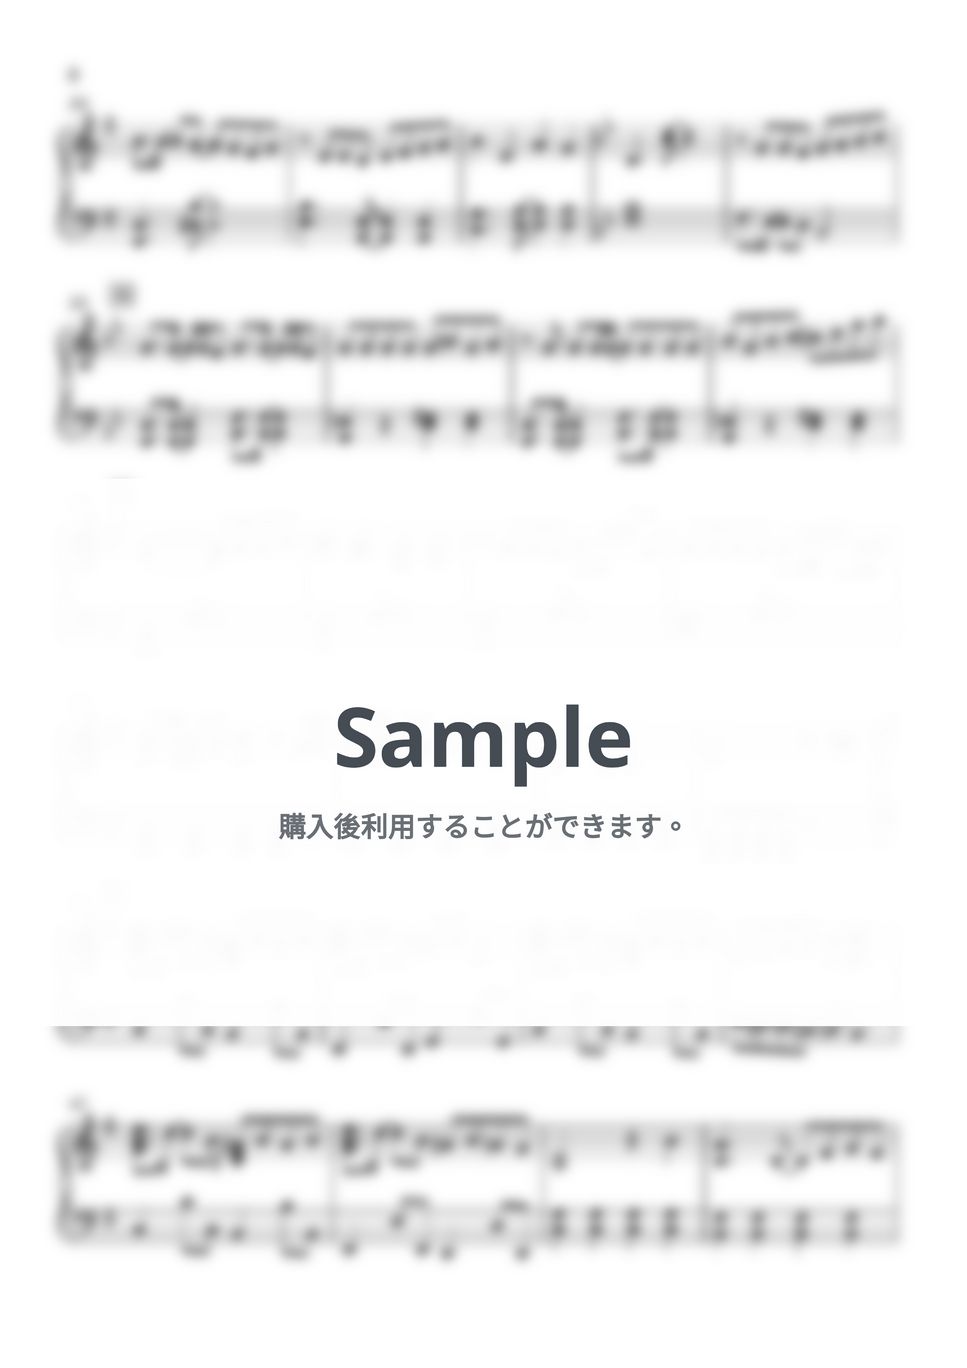 ZAQ - マイナーピース(Minor Piece) (ようこそ実力至上主義の教室へ) by Piano Lovers. jp